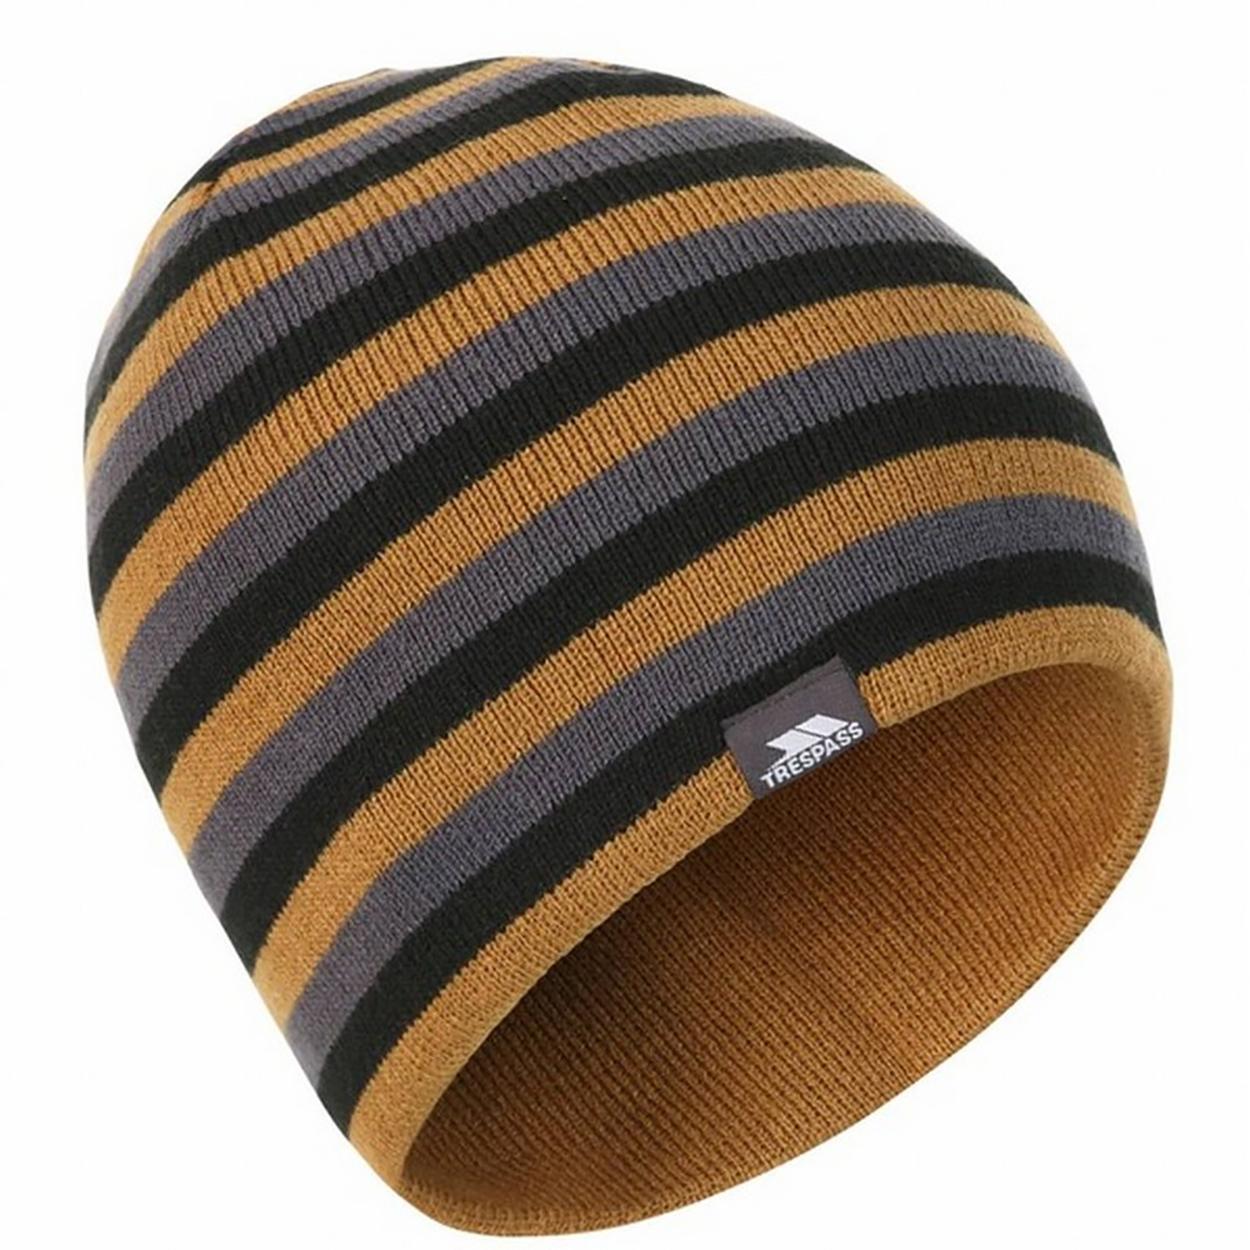 Trespass Mens Coaker Beanie Hat (Sandstone) (One size)